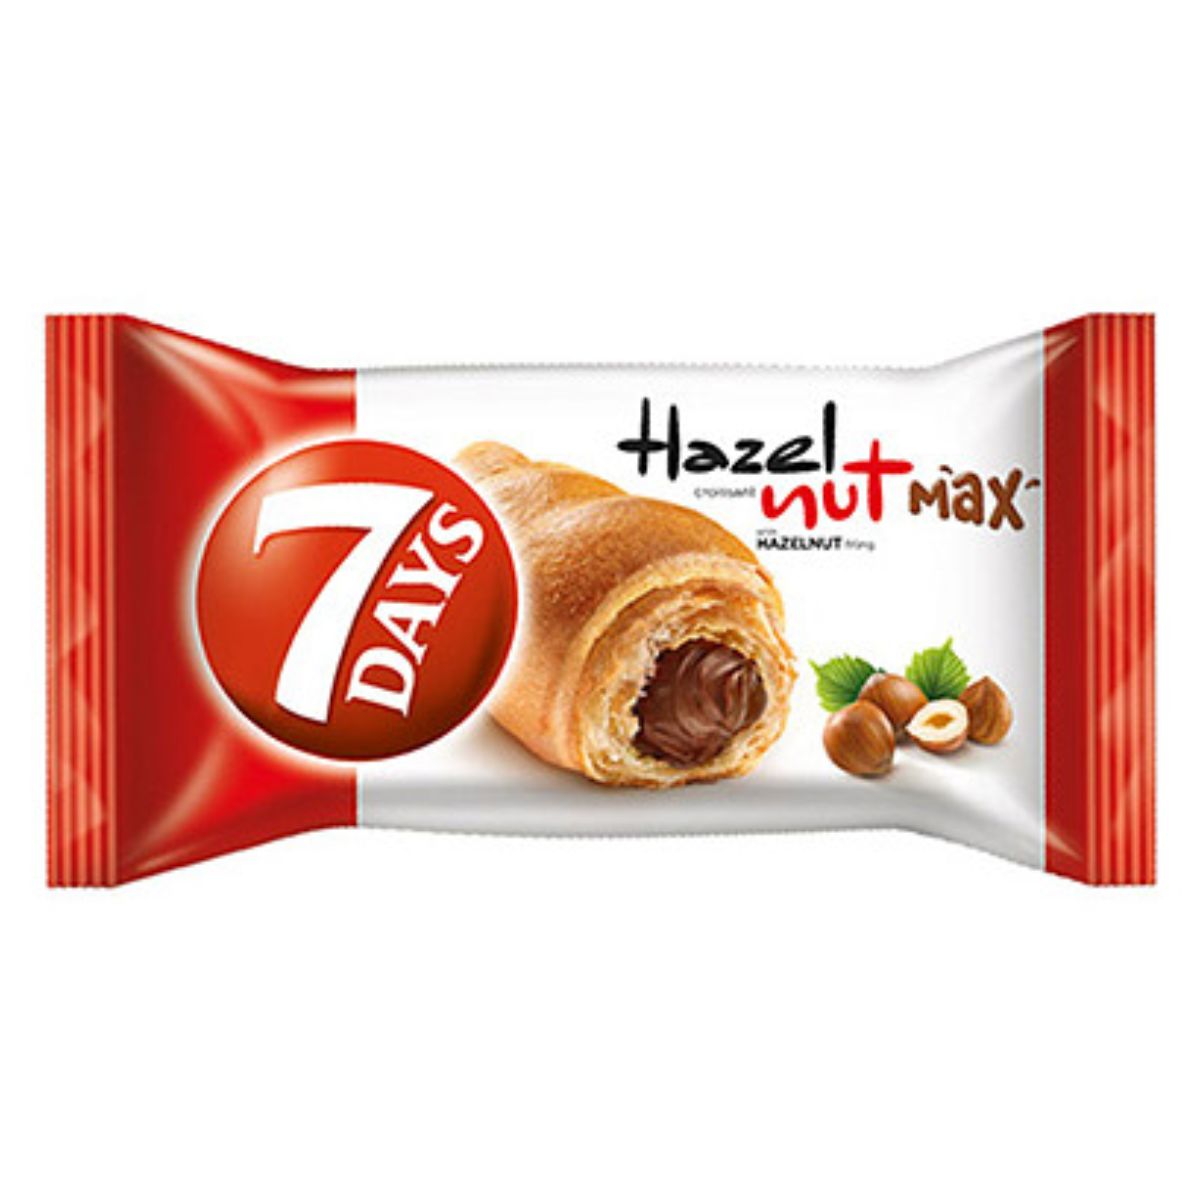 Packaged hazelnut-flavored cream-filled croissant named "7 Days - Croissant Hazelnut Max - 80g".